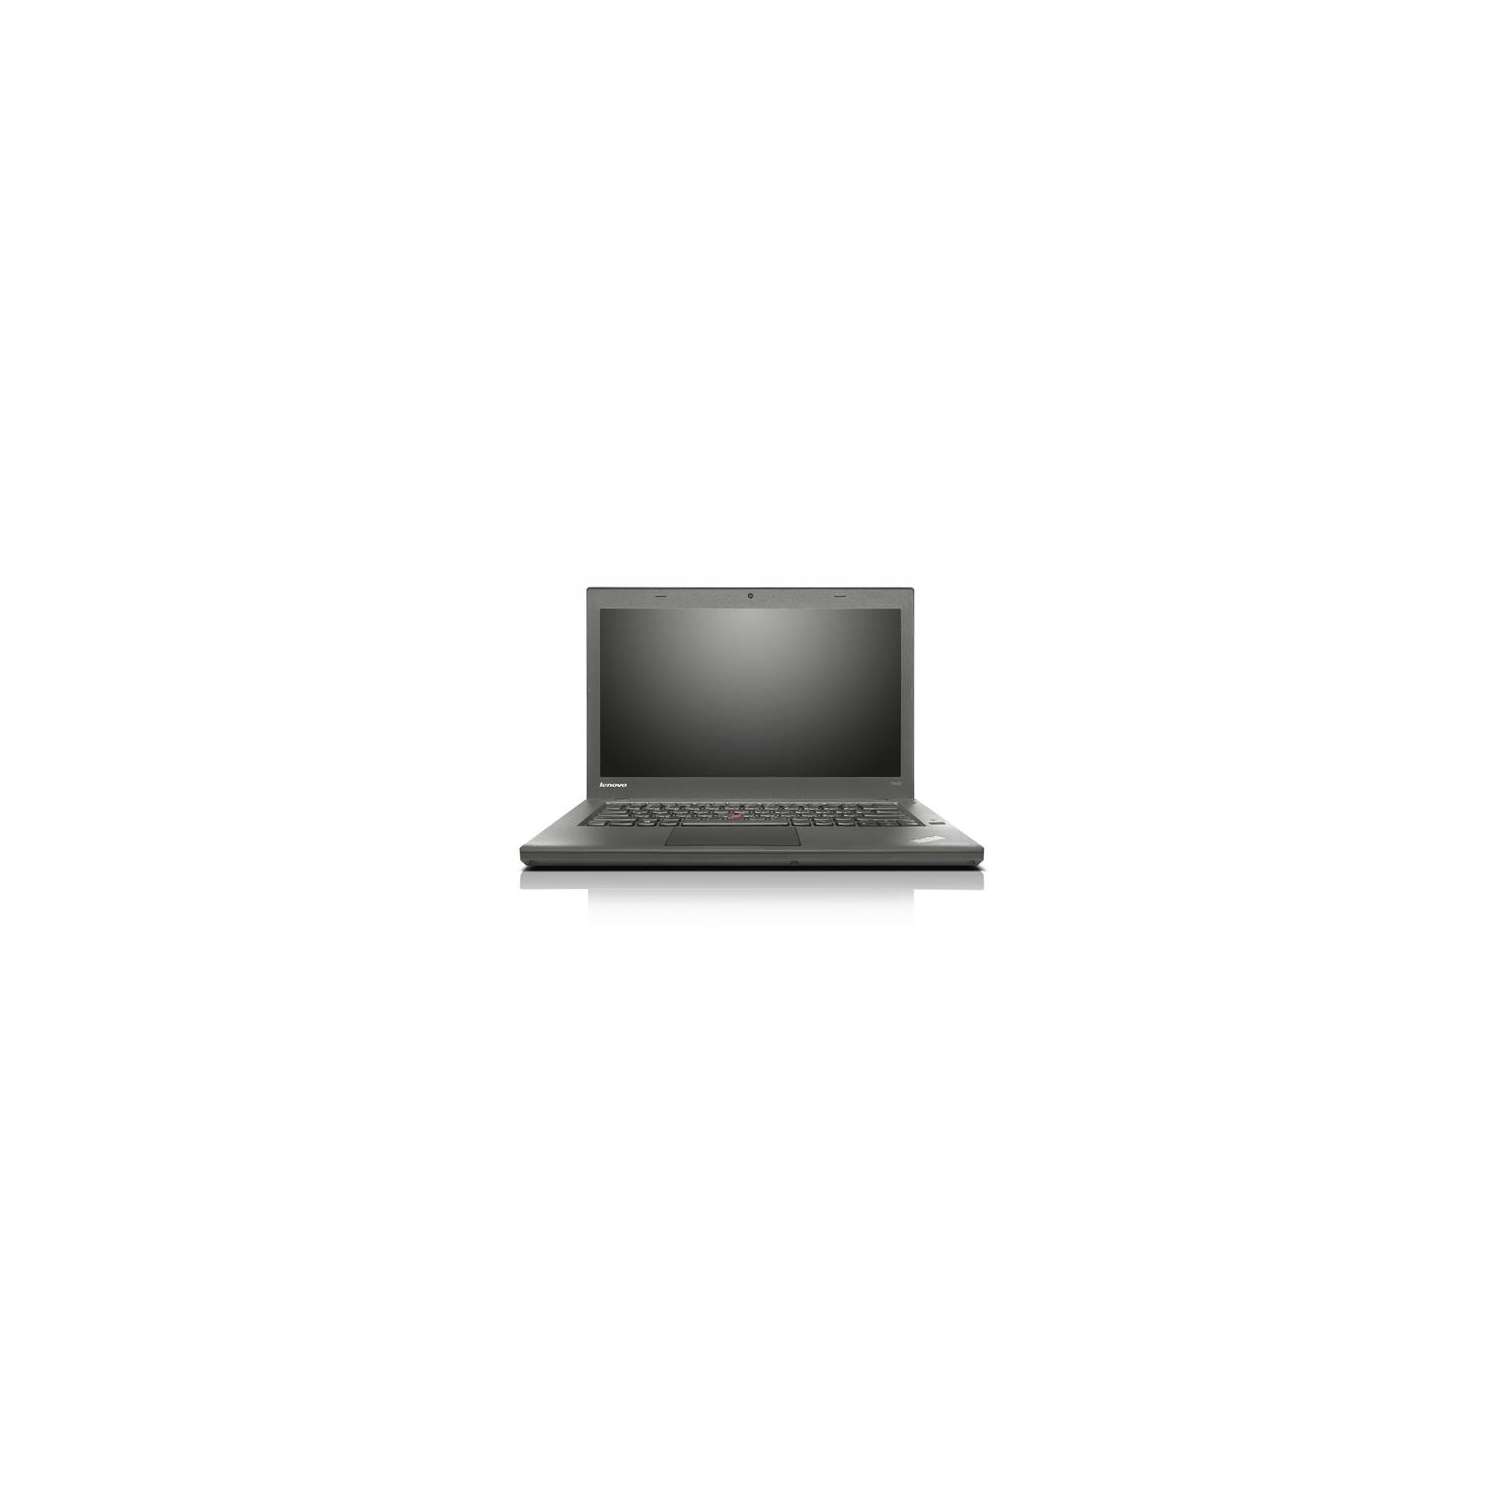 Lenovo ThinkPad T440 14" Laptop, Intel Core i5-4300U CPU, 8GB RAM, Fast 128GB SSD, Webcam, Windows 10 - Refurbished